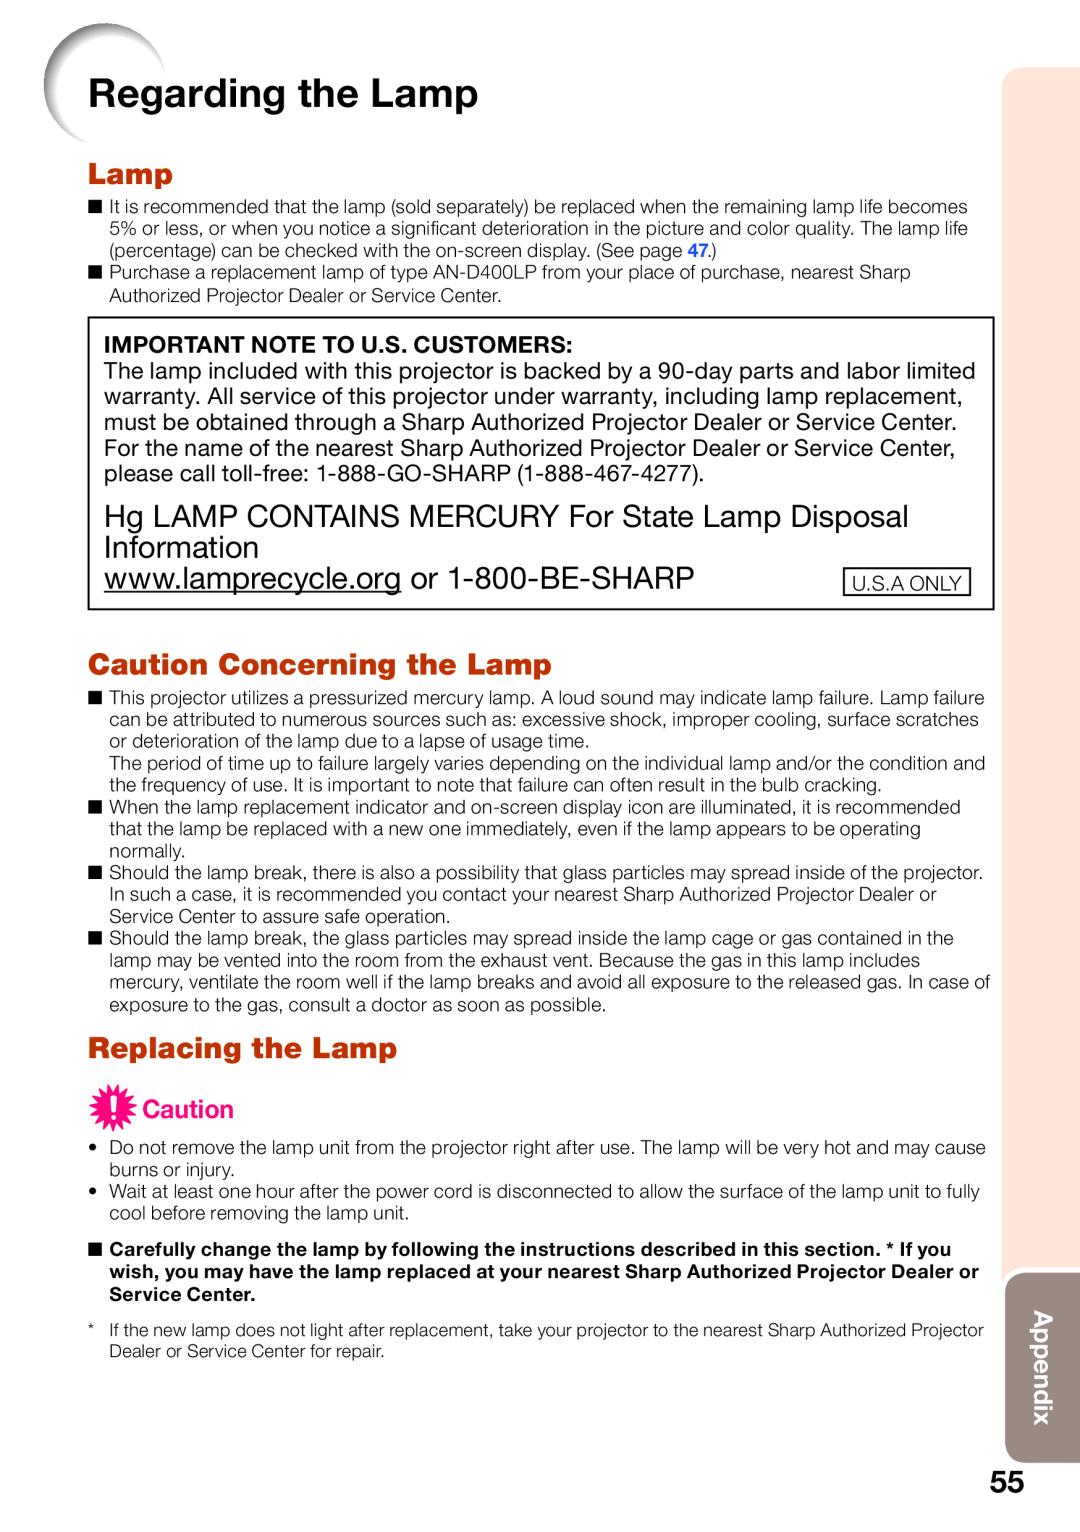 Sharp PG-D4010X Regarding the Lamp, Caution Concerning the Lamp, Replacing the Lamp, Important Note To U.S. Customers 